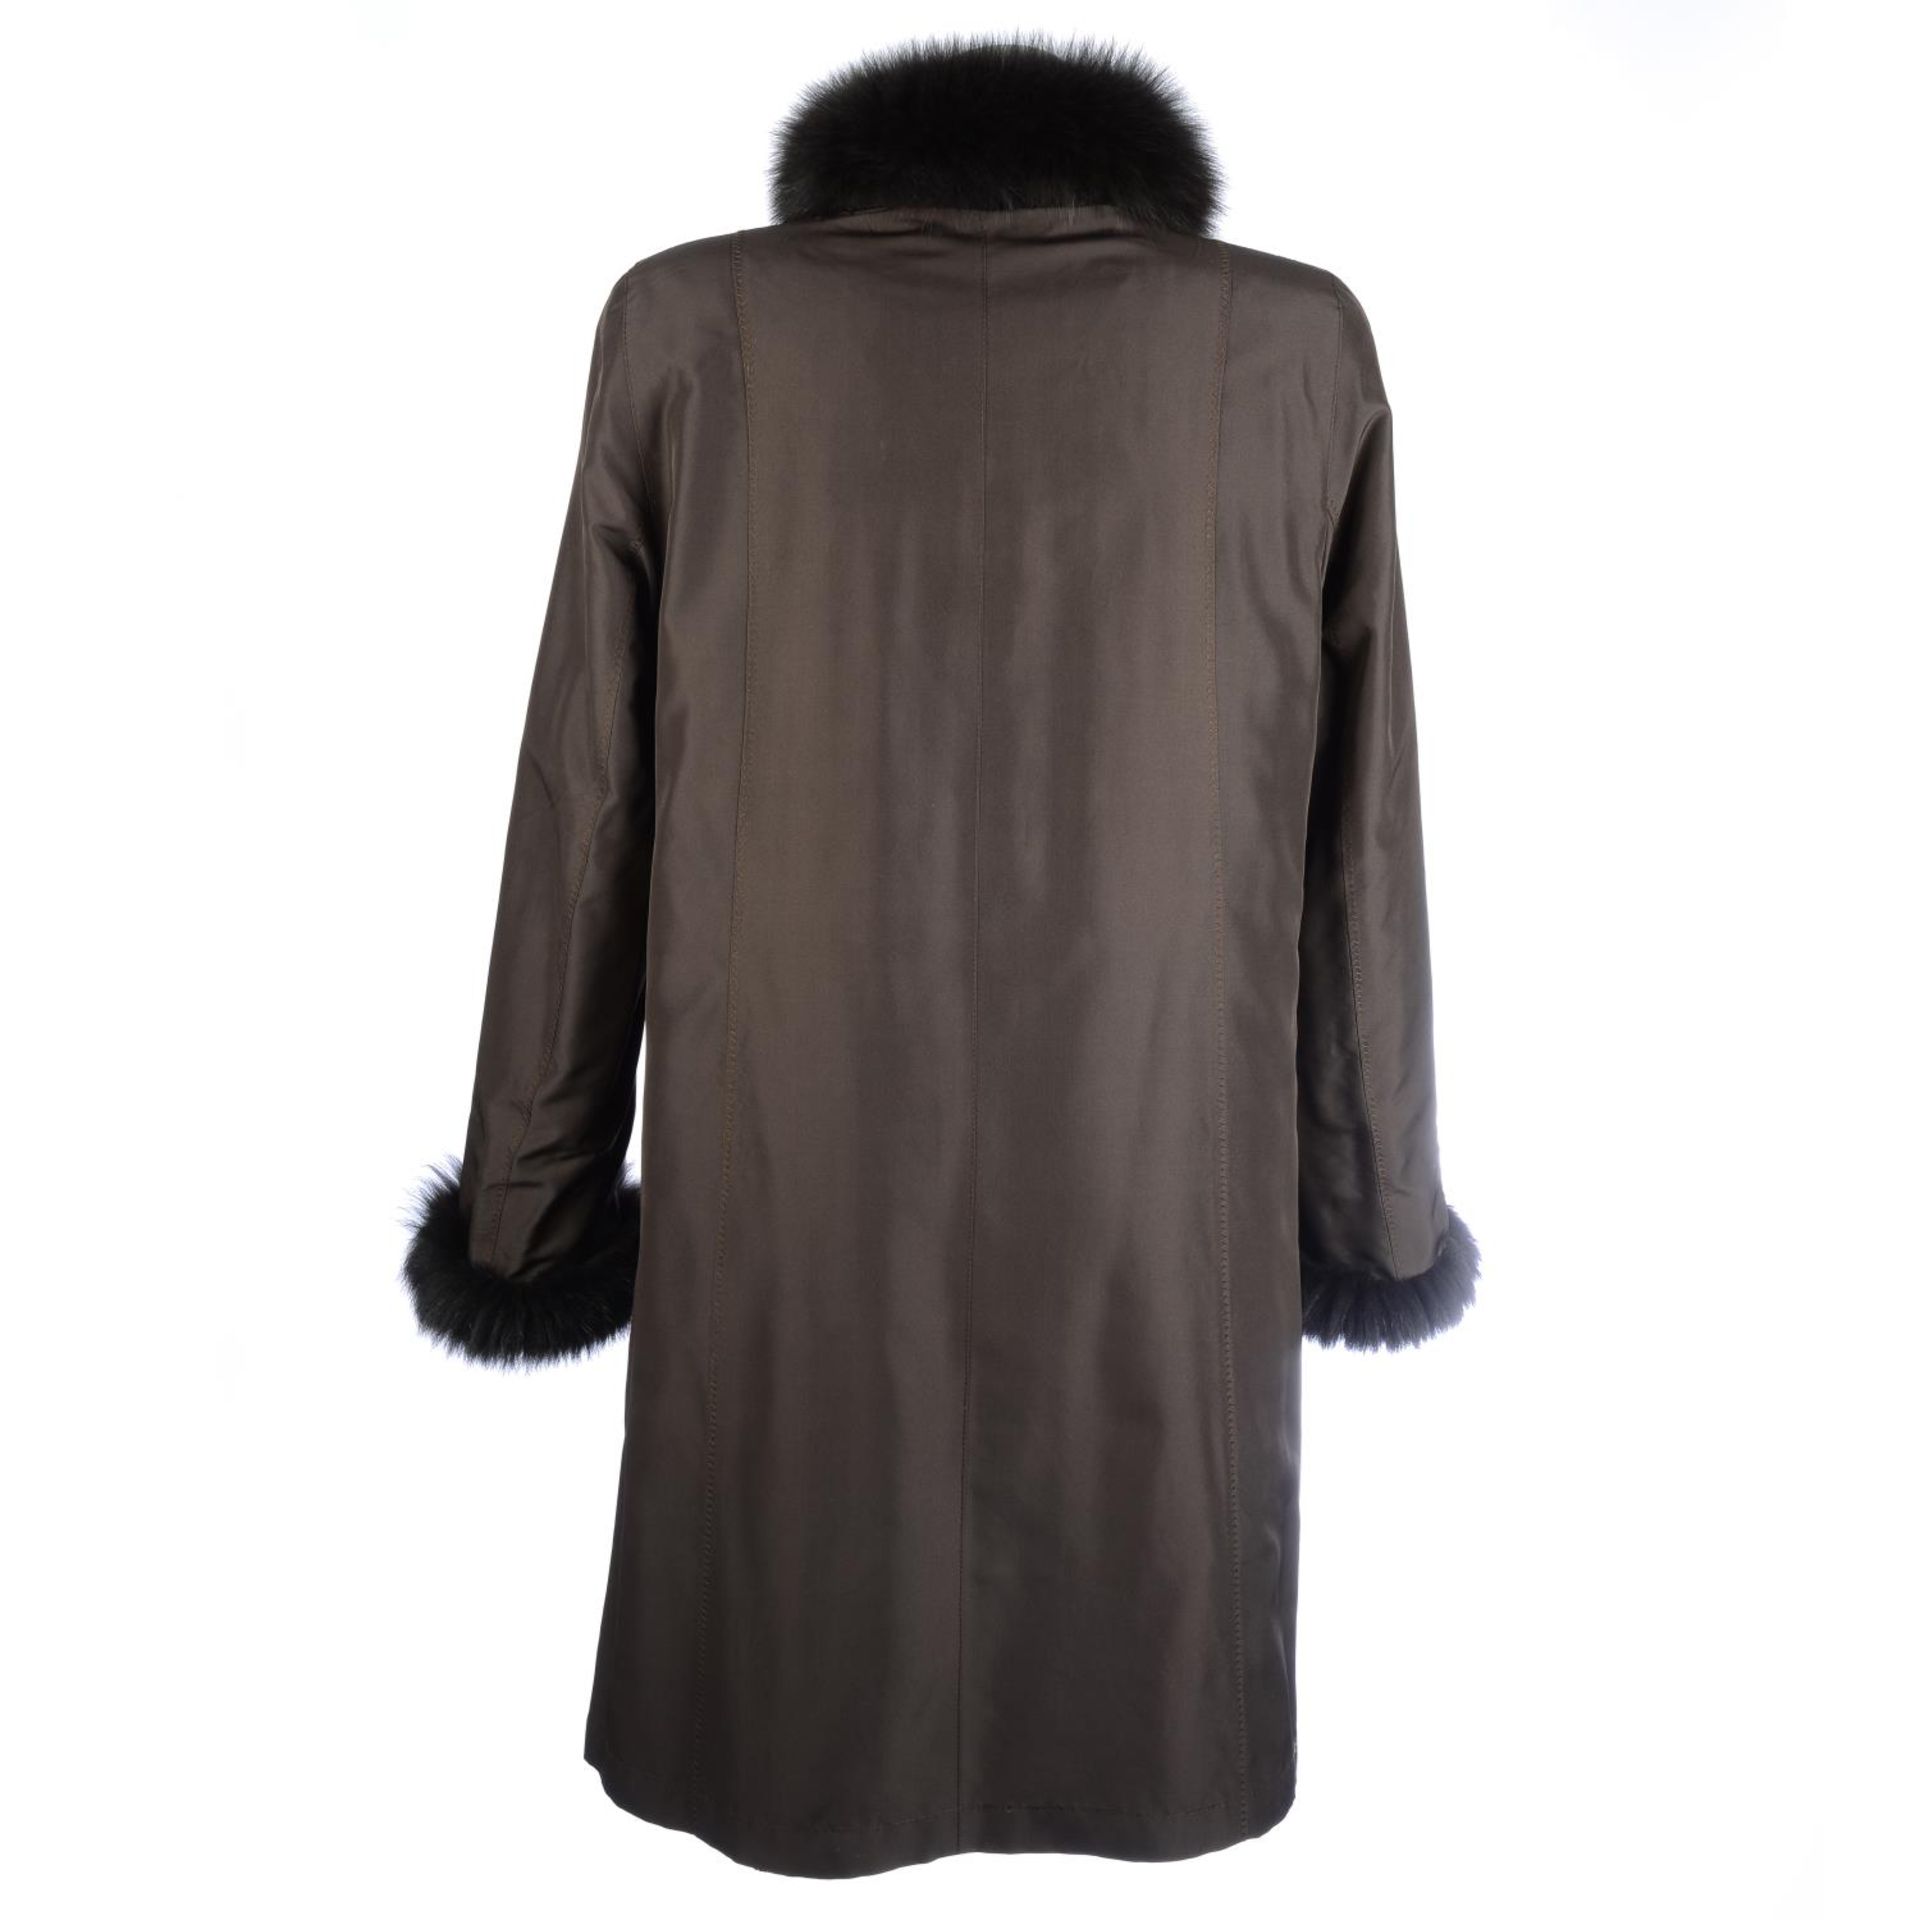 A reversible sheared mink coat with fox fur trim. - Bild 3 aus 4